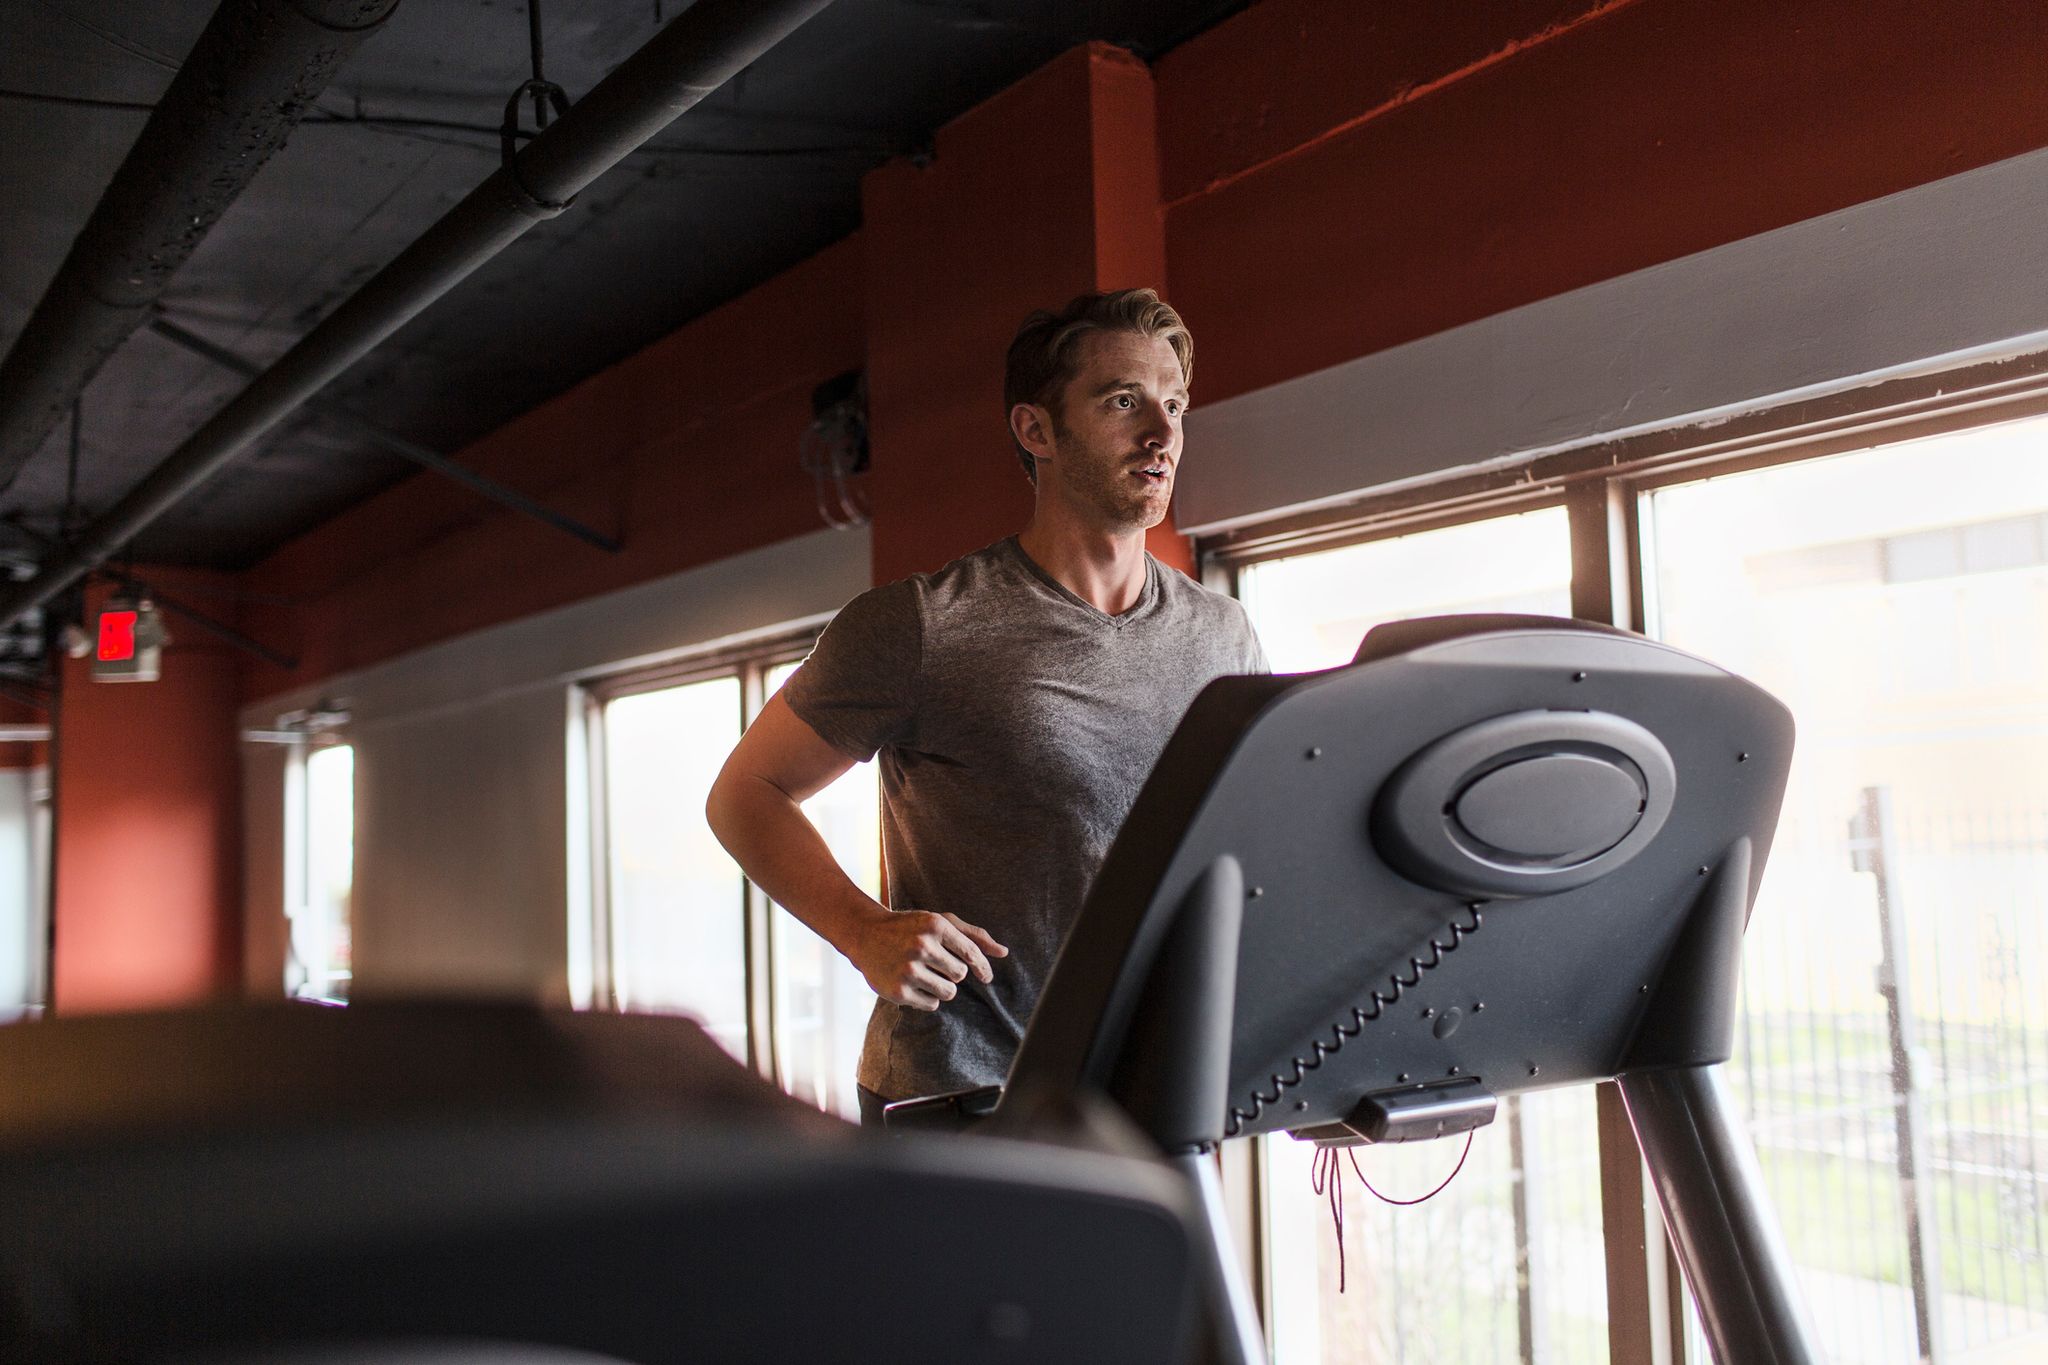 how much marathon training should you do on a treadmill?